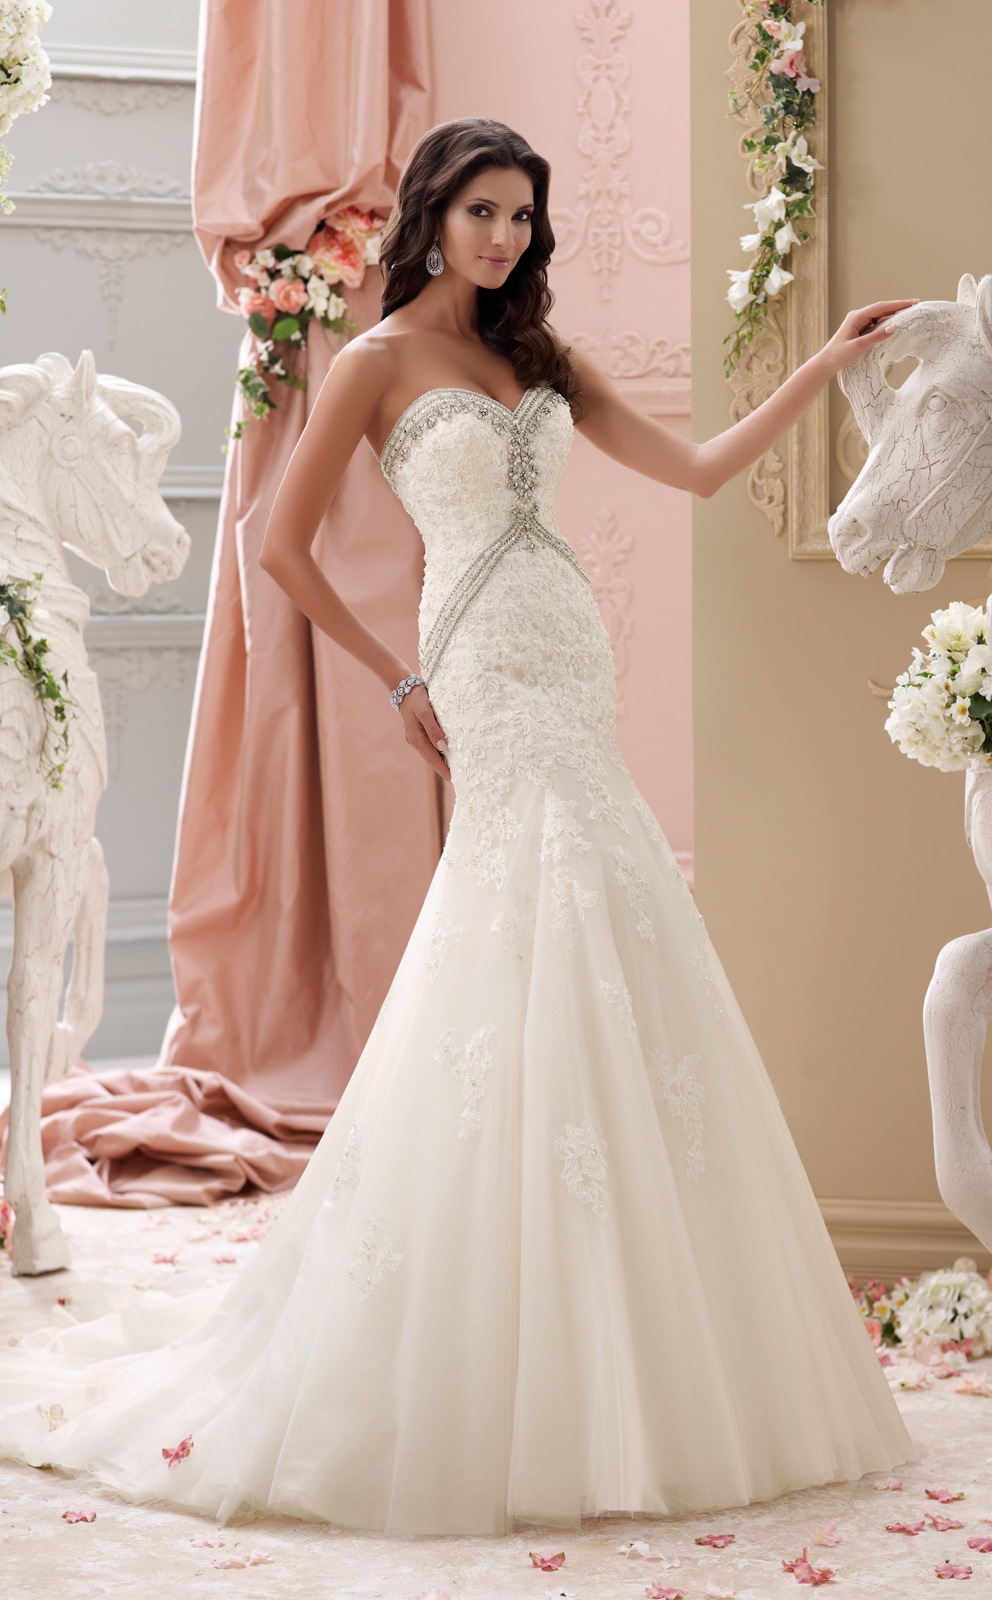 20 Superb Strapless Wedding Dresses Ideas Wohh Wedding 2710